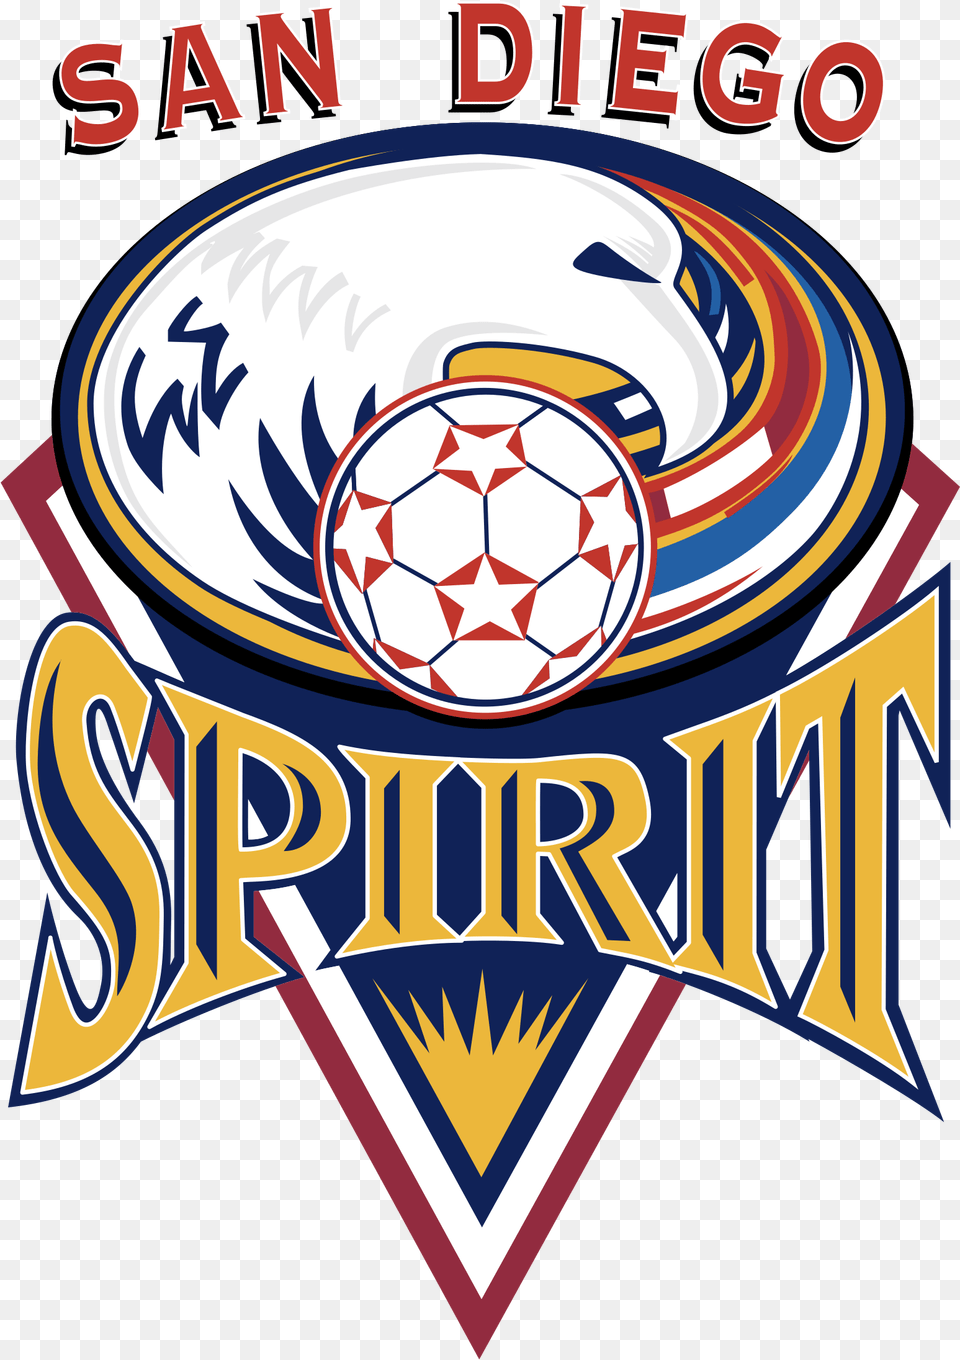 San Diego Spirit, Ball, Football, Soccer, Soccer Ball Png Image